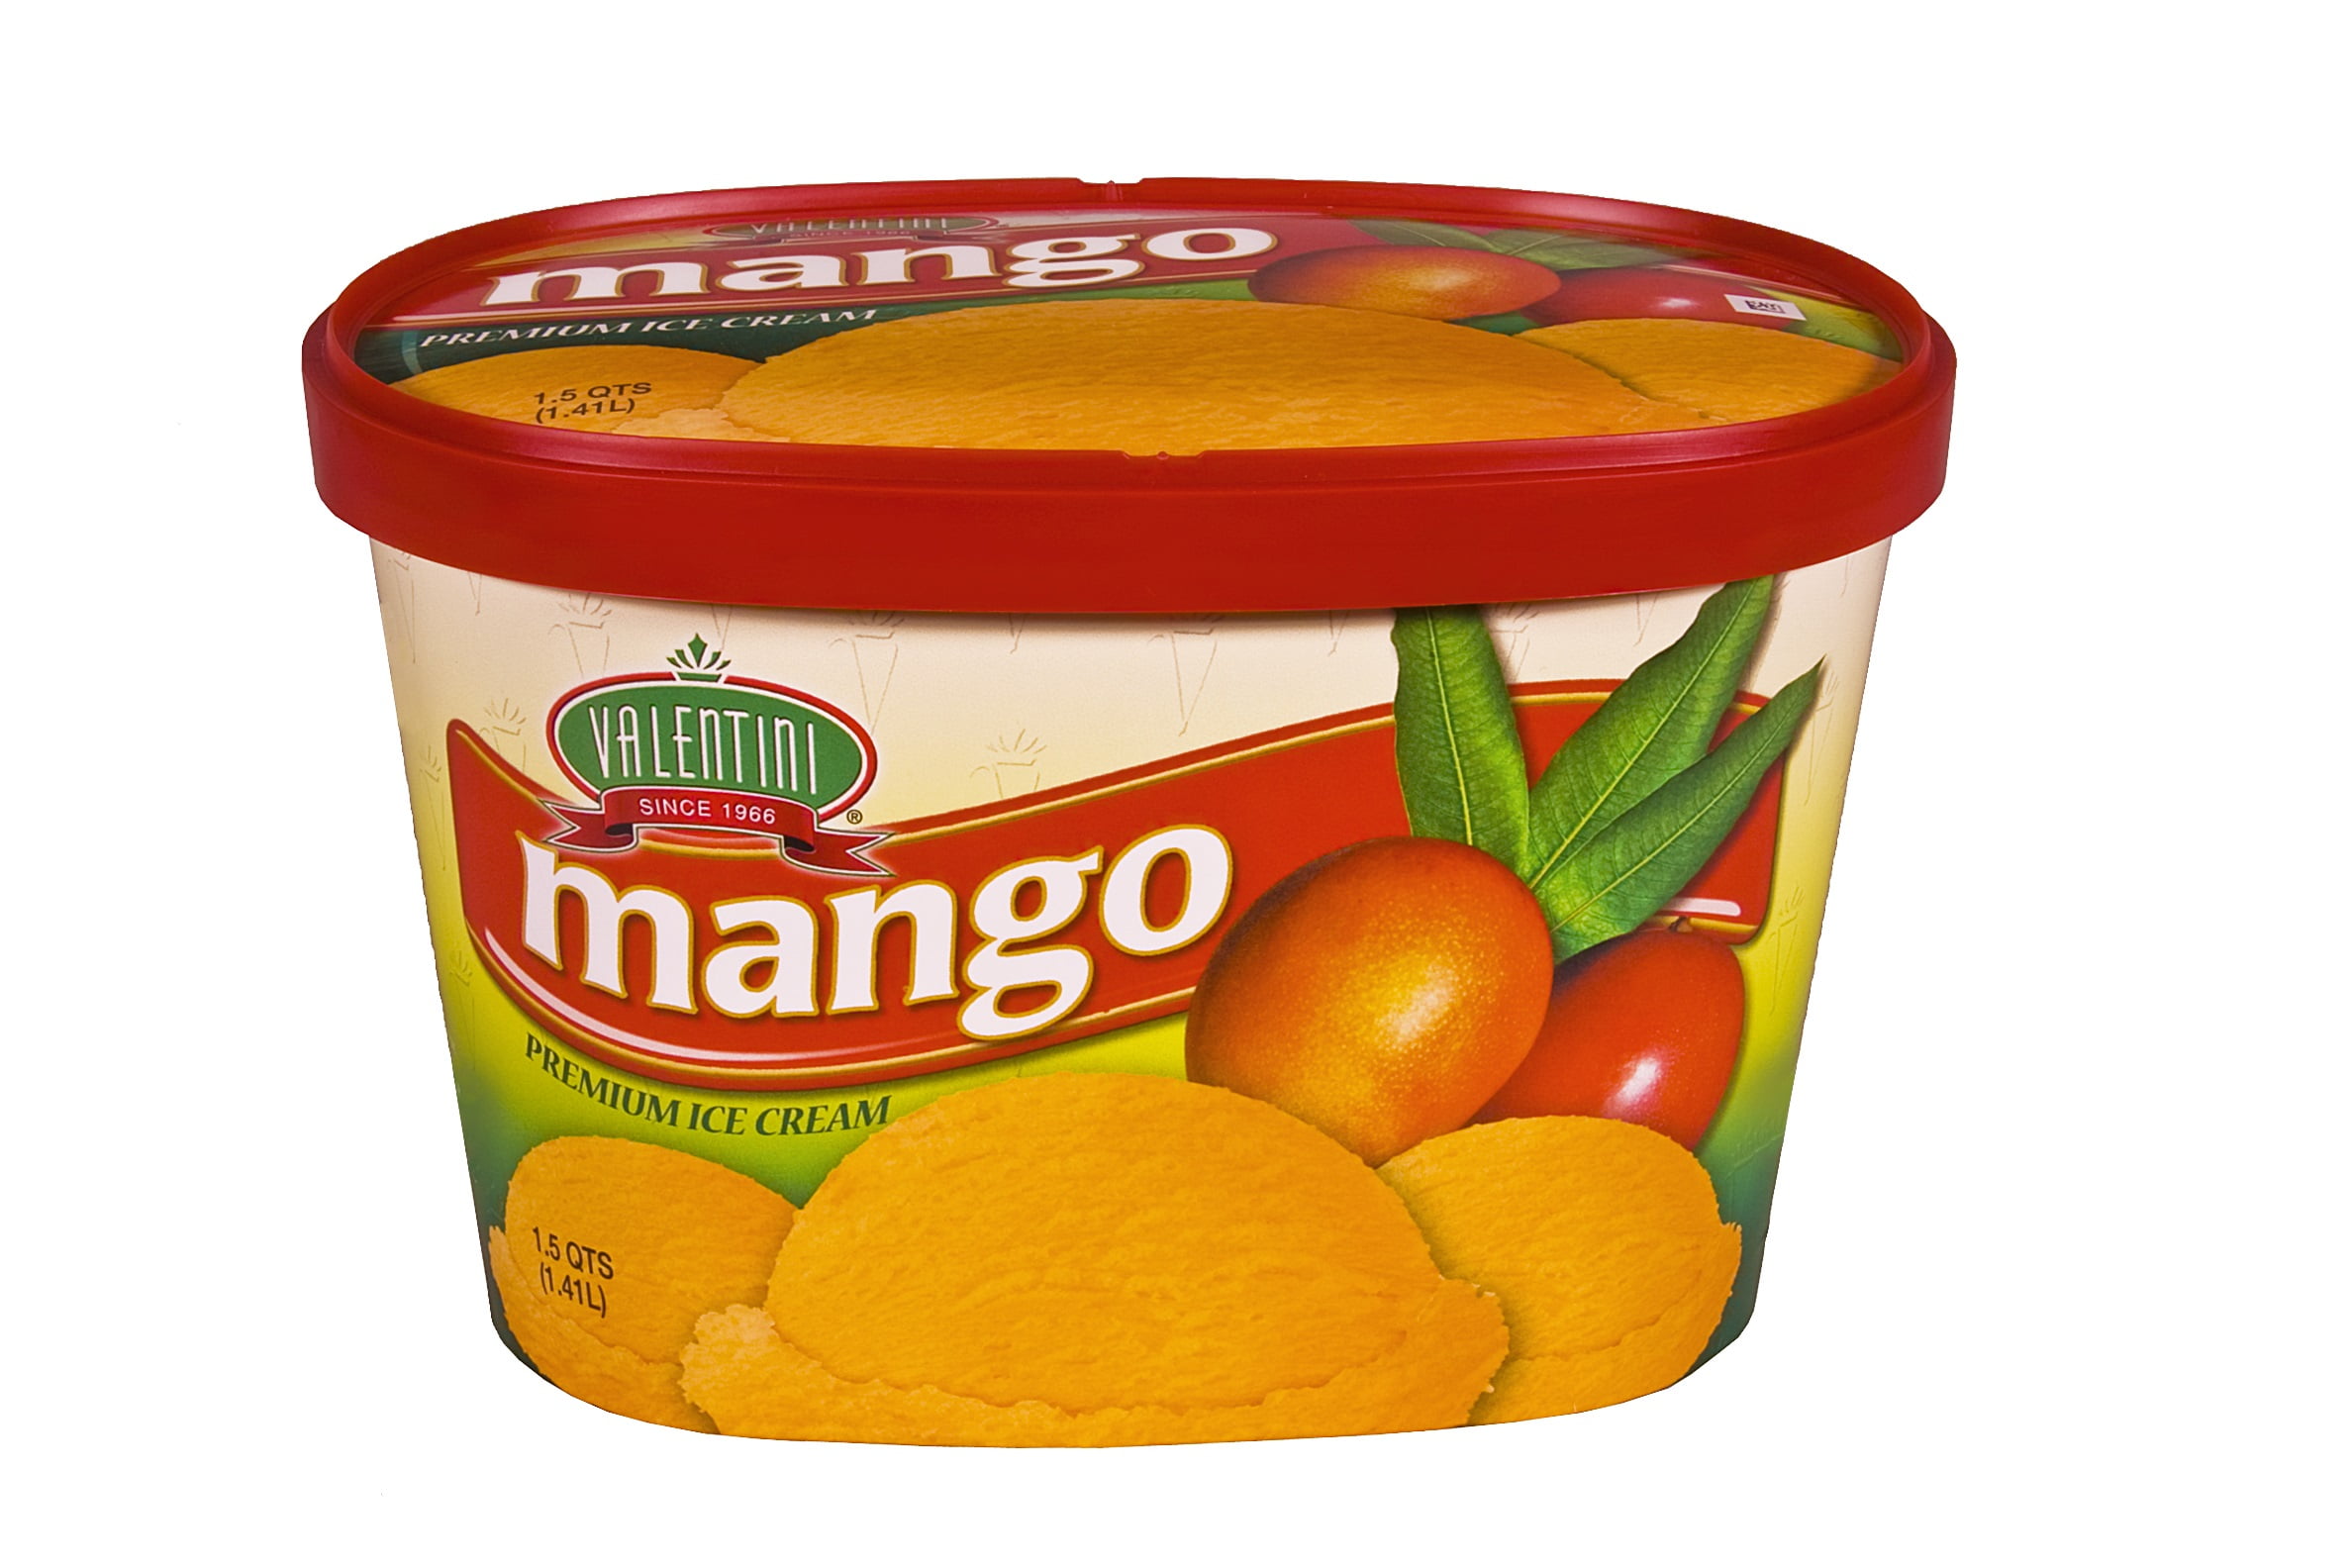 Mangoai co. Ice Cream Mango KDD. Щербет " Gelato" манго-апельсин 80гр*20шт. Kuwait Ice Cream Mango KDD. Филипенко бренд шарики манго.